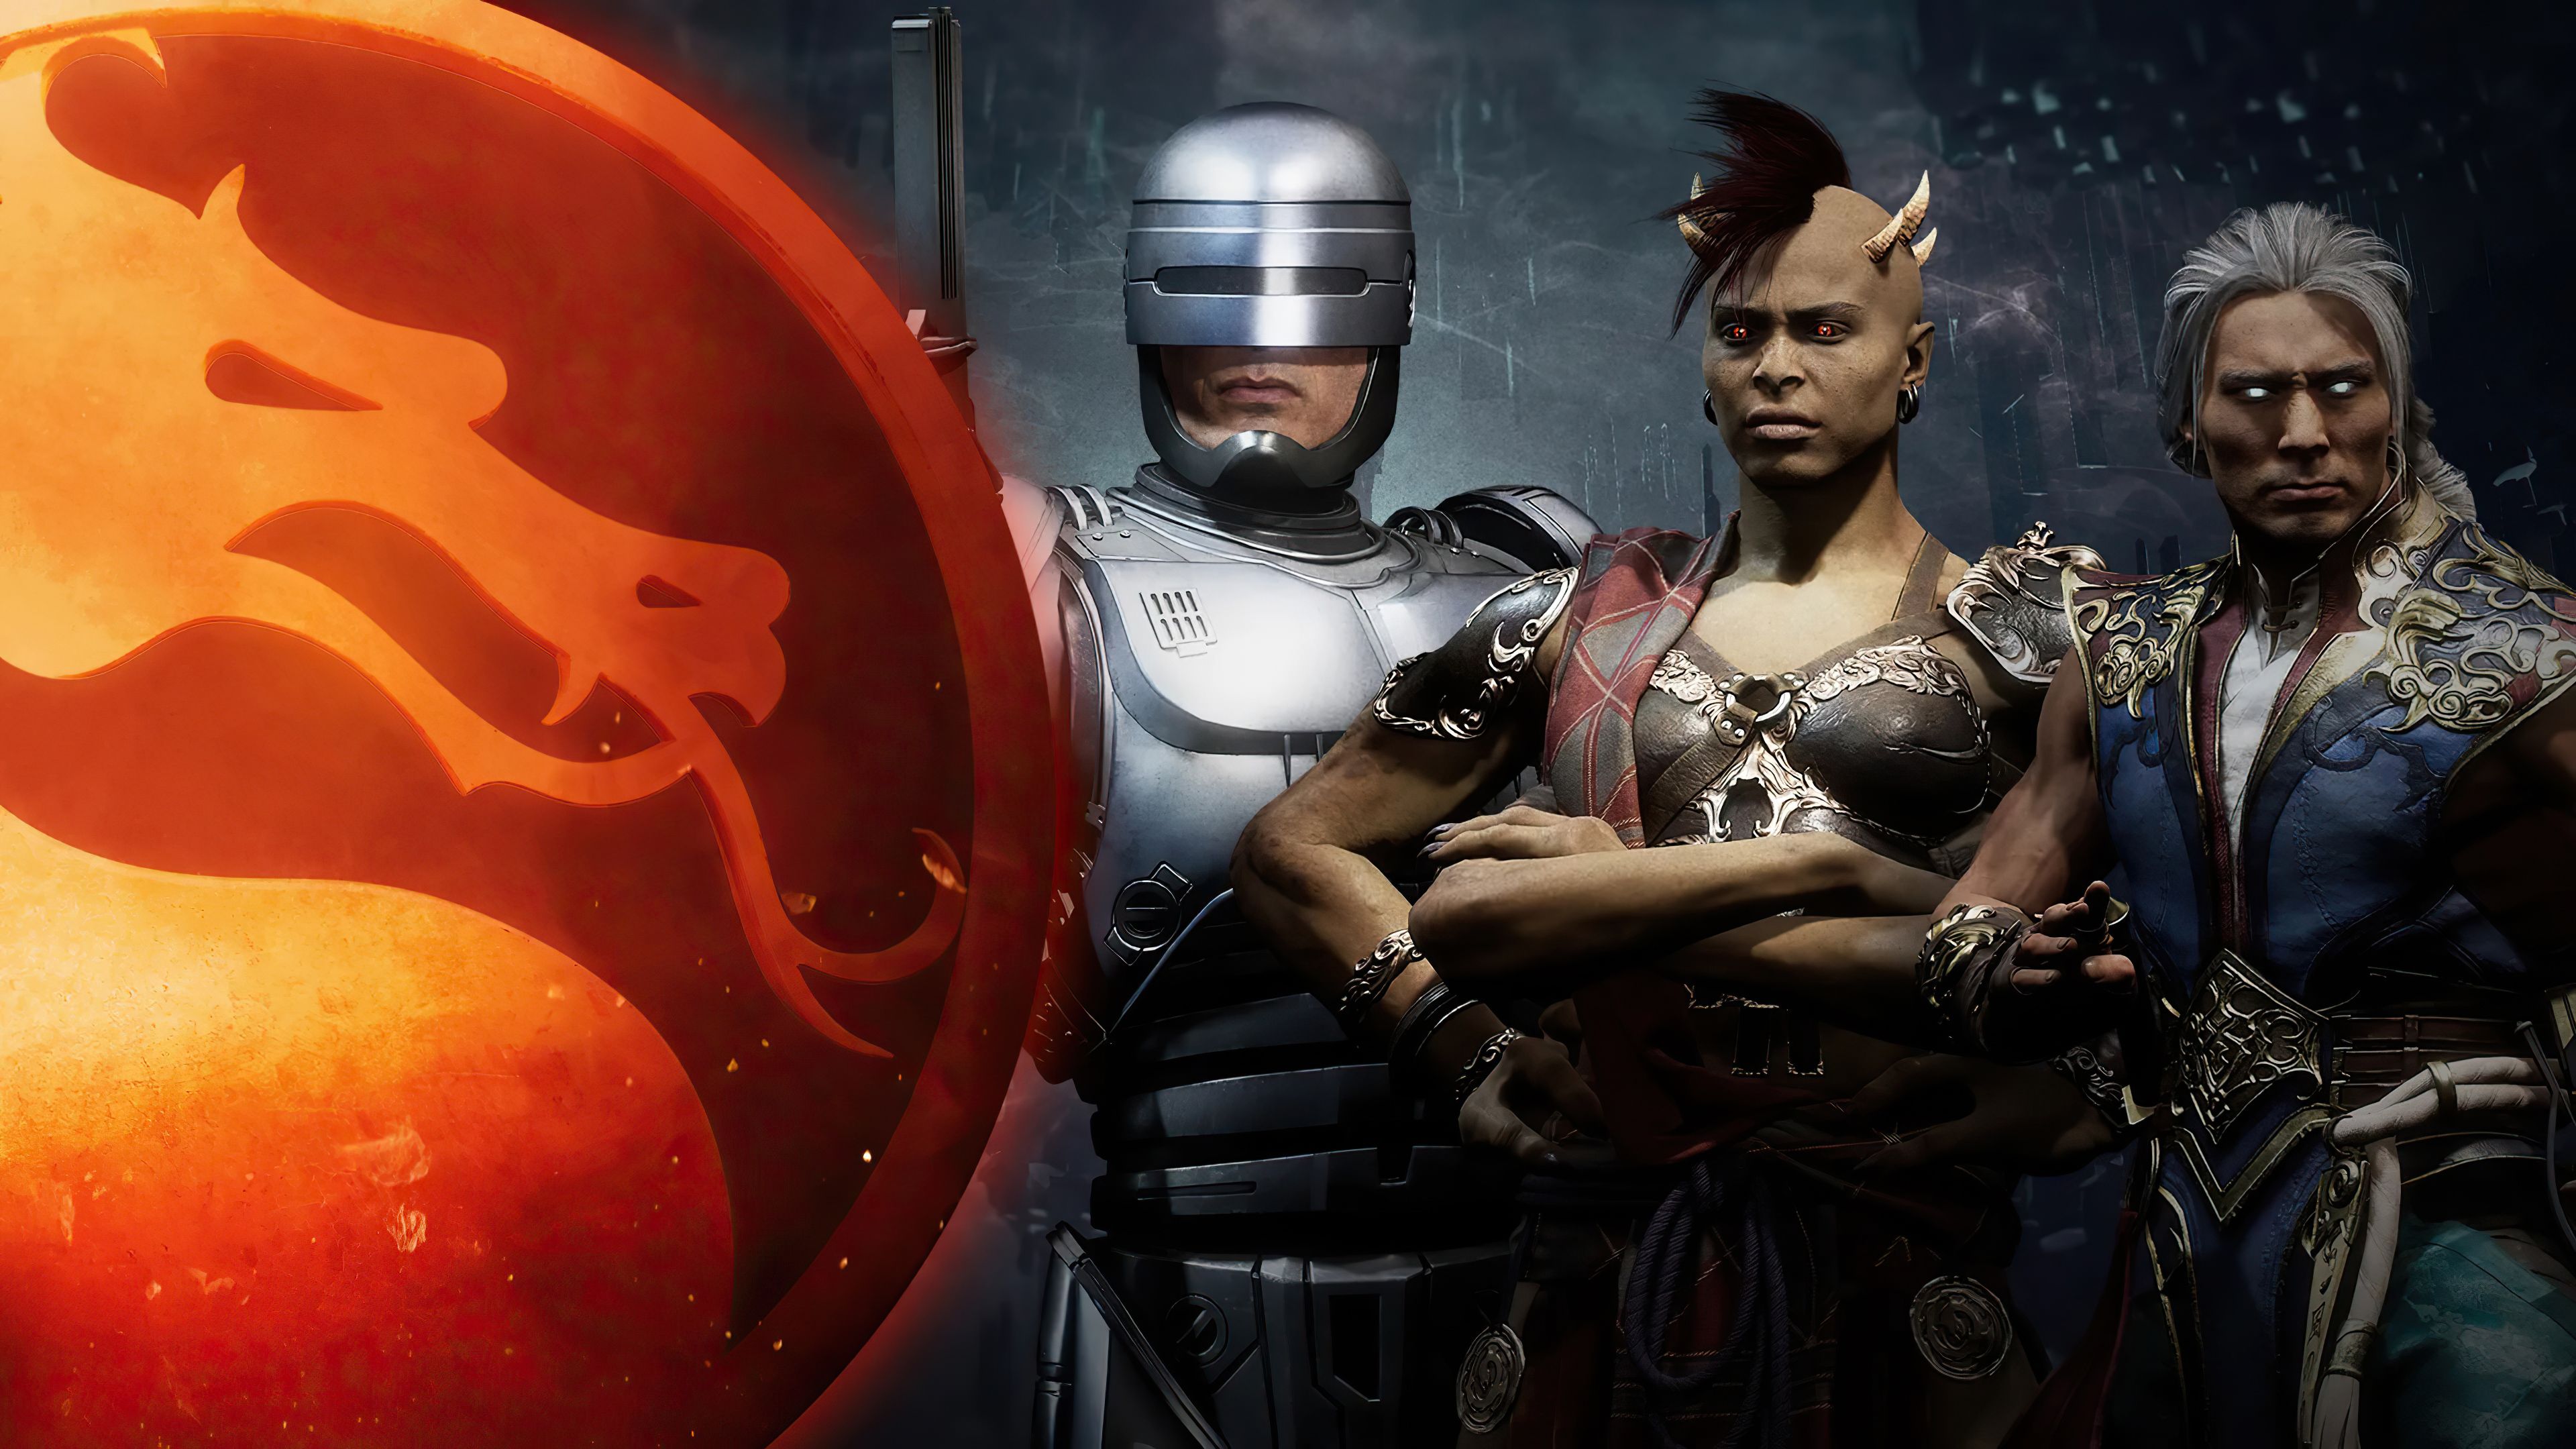 Mortal Kombat 11 Aftermath Fujin Sheeva And RoboCop 4k, HD Games, 4k Wallpaper, Image, Background, Photo and Picture